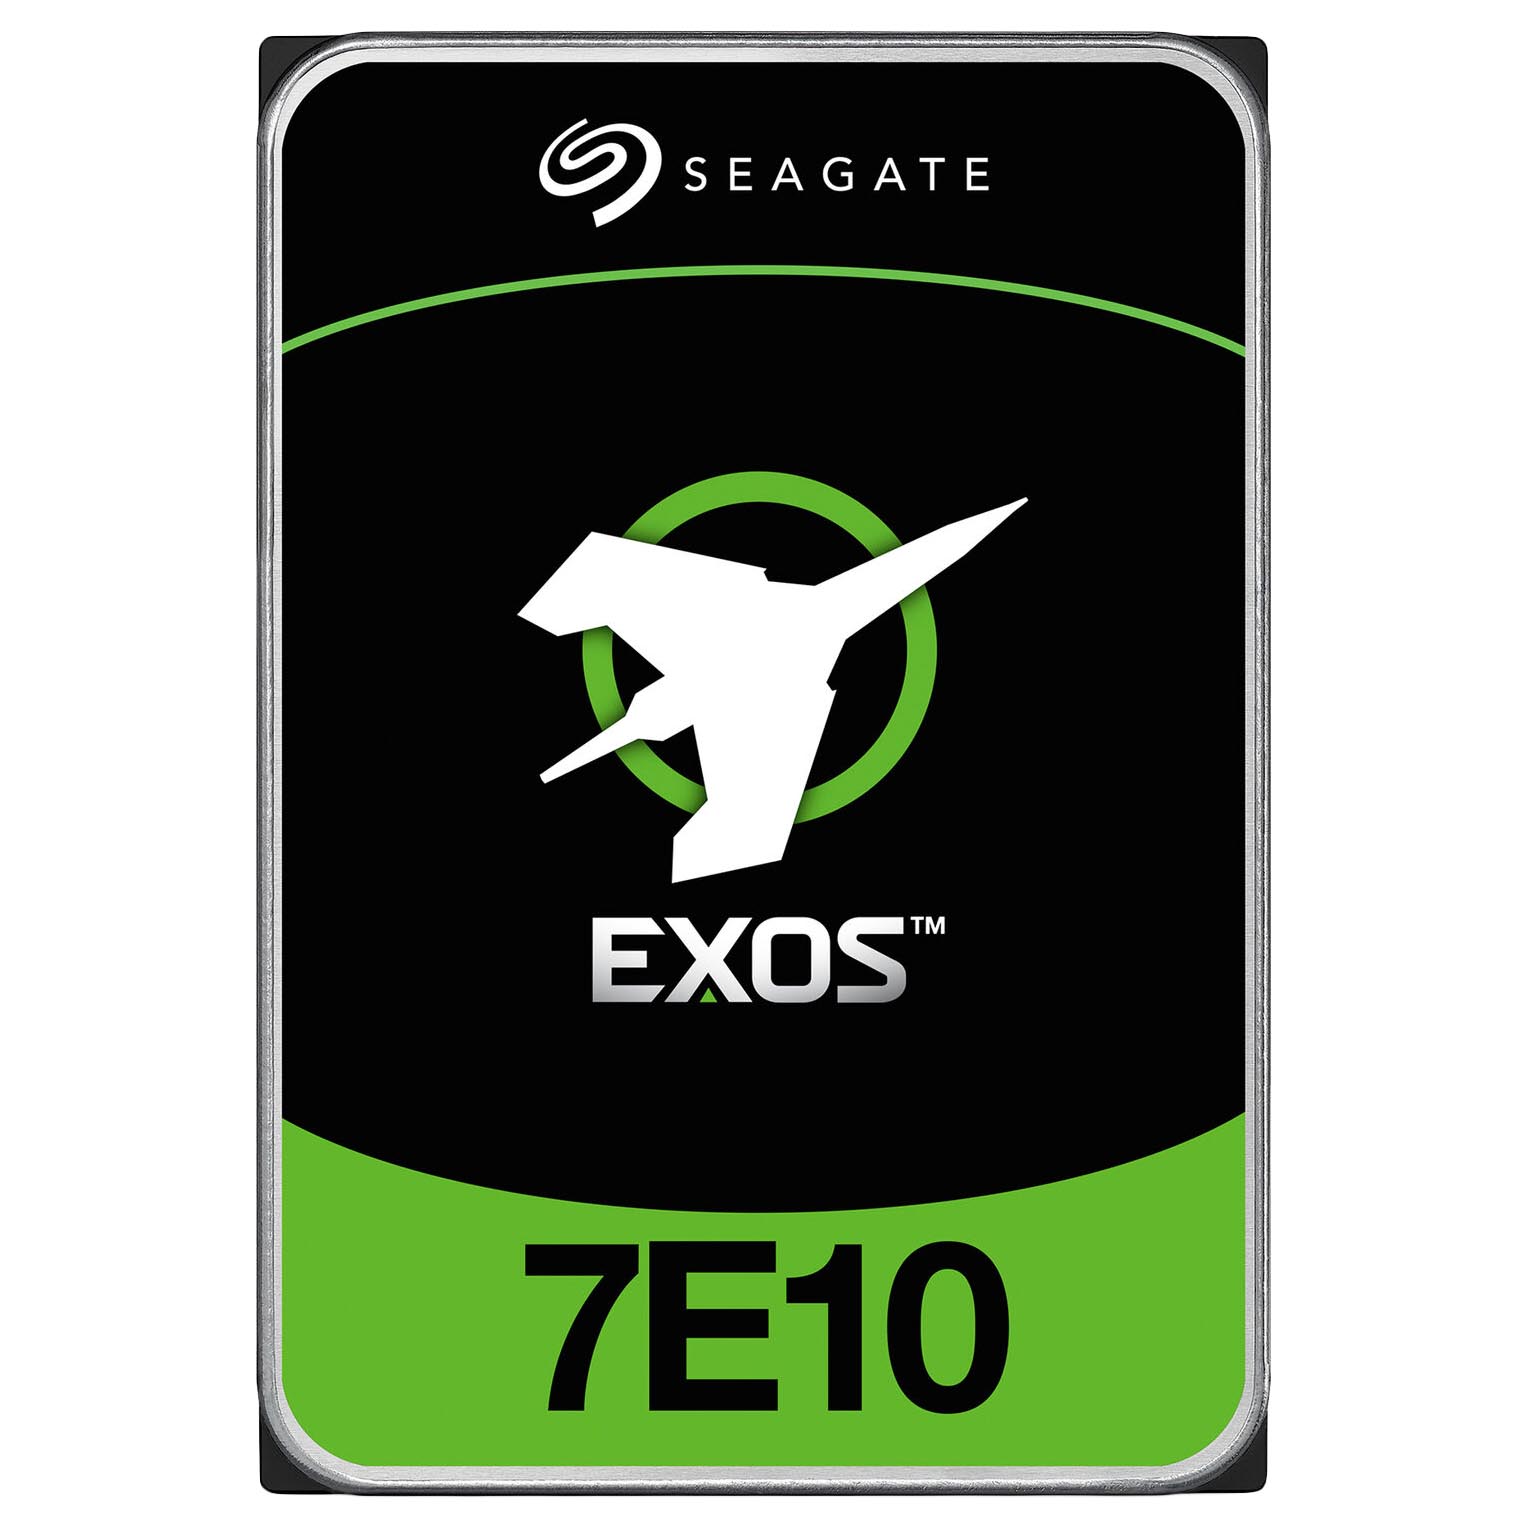 Внутренний жесткий диск Seagate Exos 7E10, ST4000NM000B, 4 Тб жесткий диск seagate exos 4tb st4000nm000a